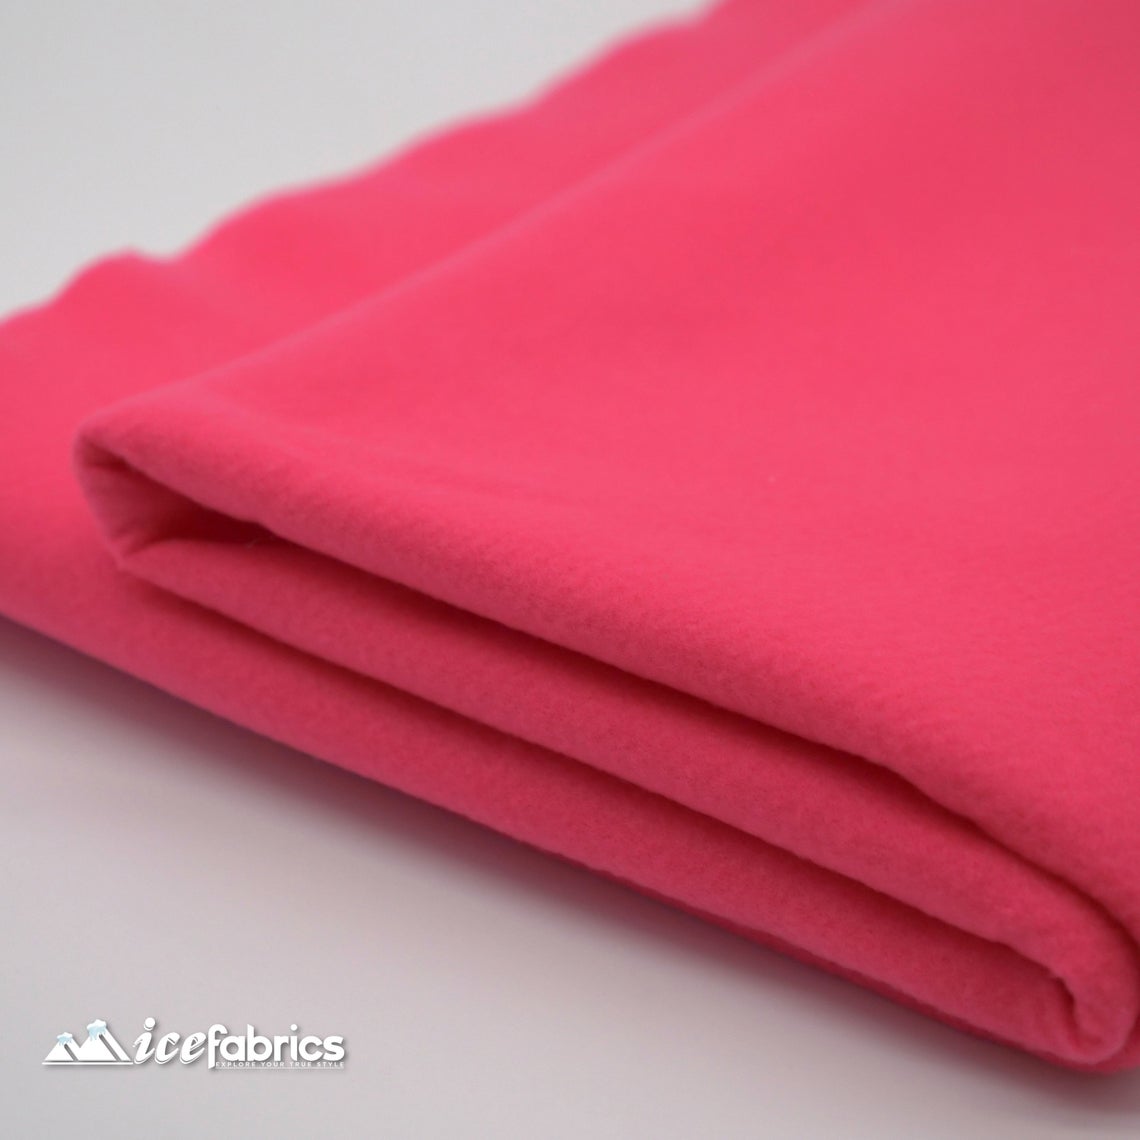 Acrylic Felt Fabric By The Roll | 20 yards | Wholesale Fabric ICE FABRICS Hot Pink